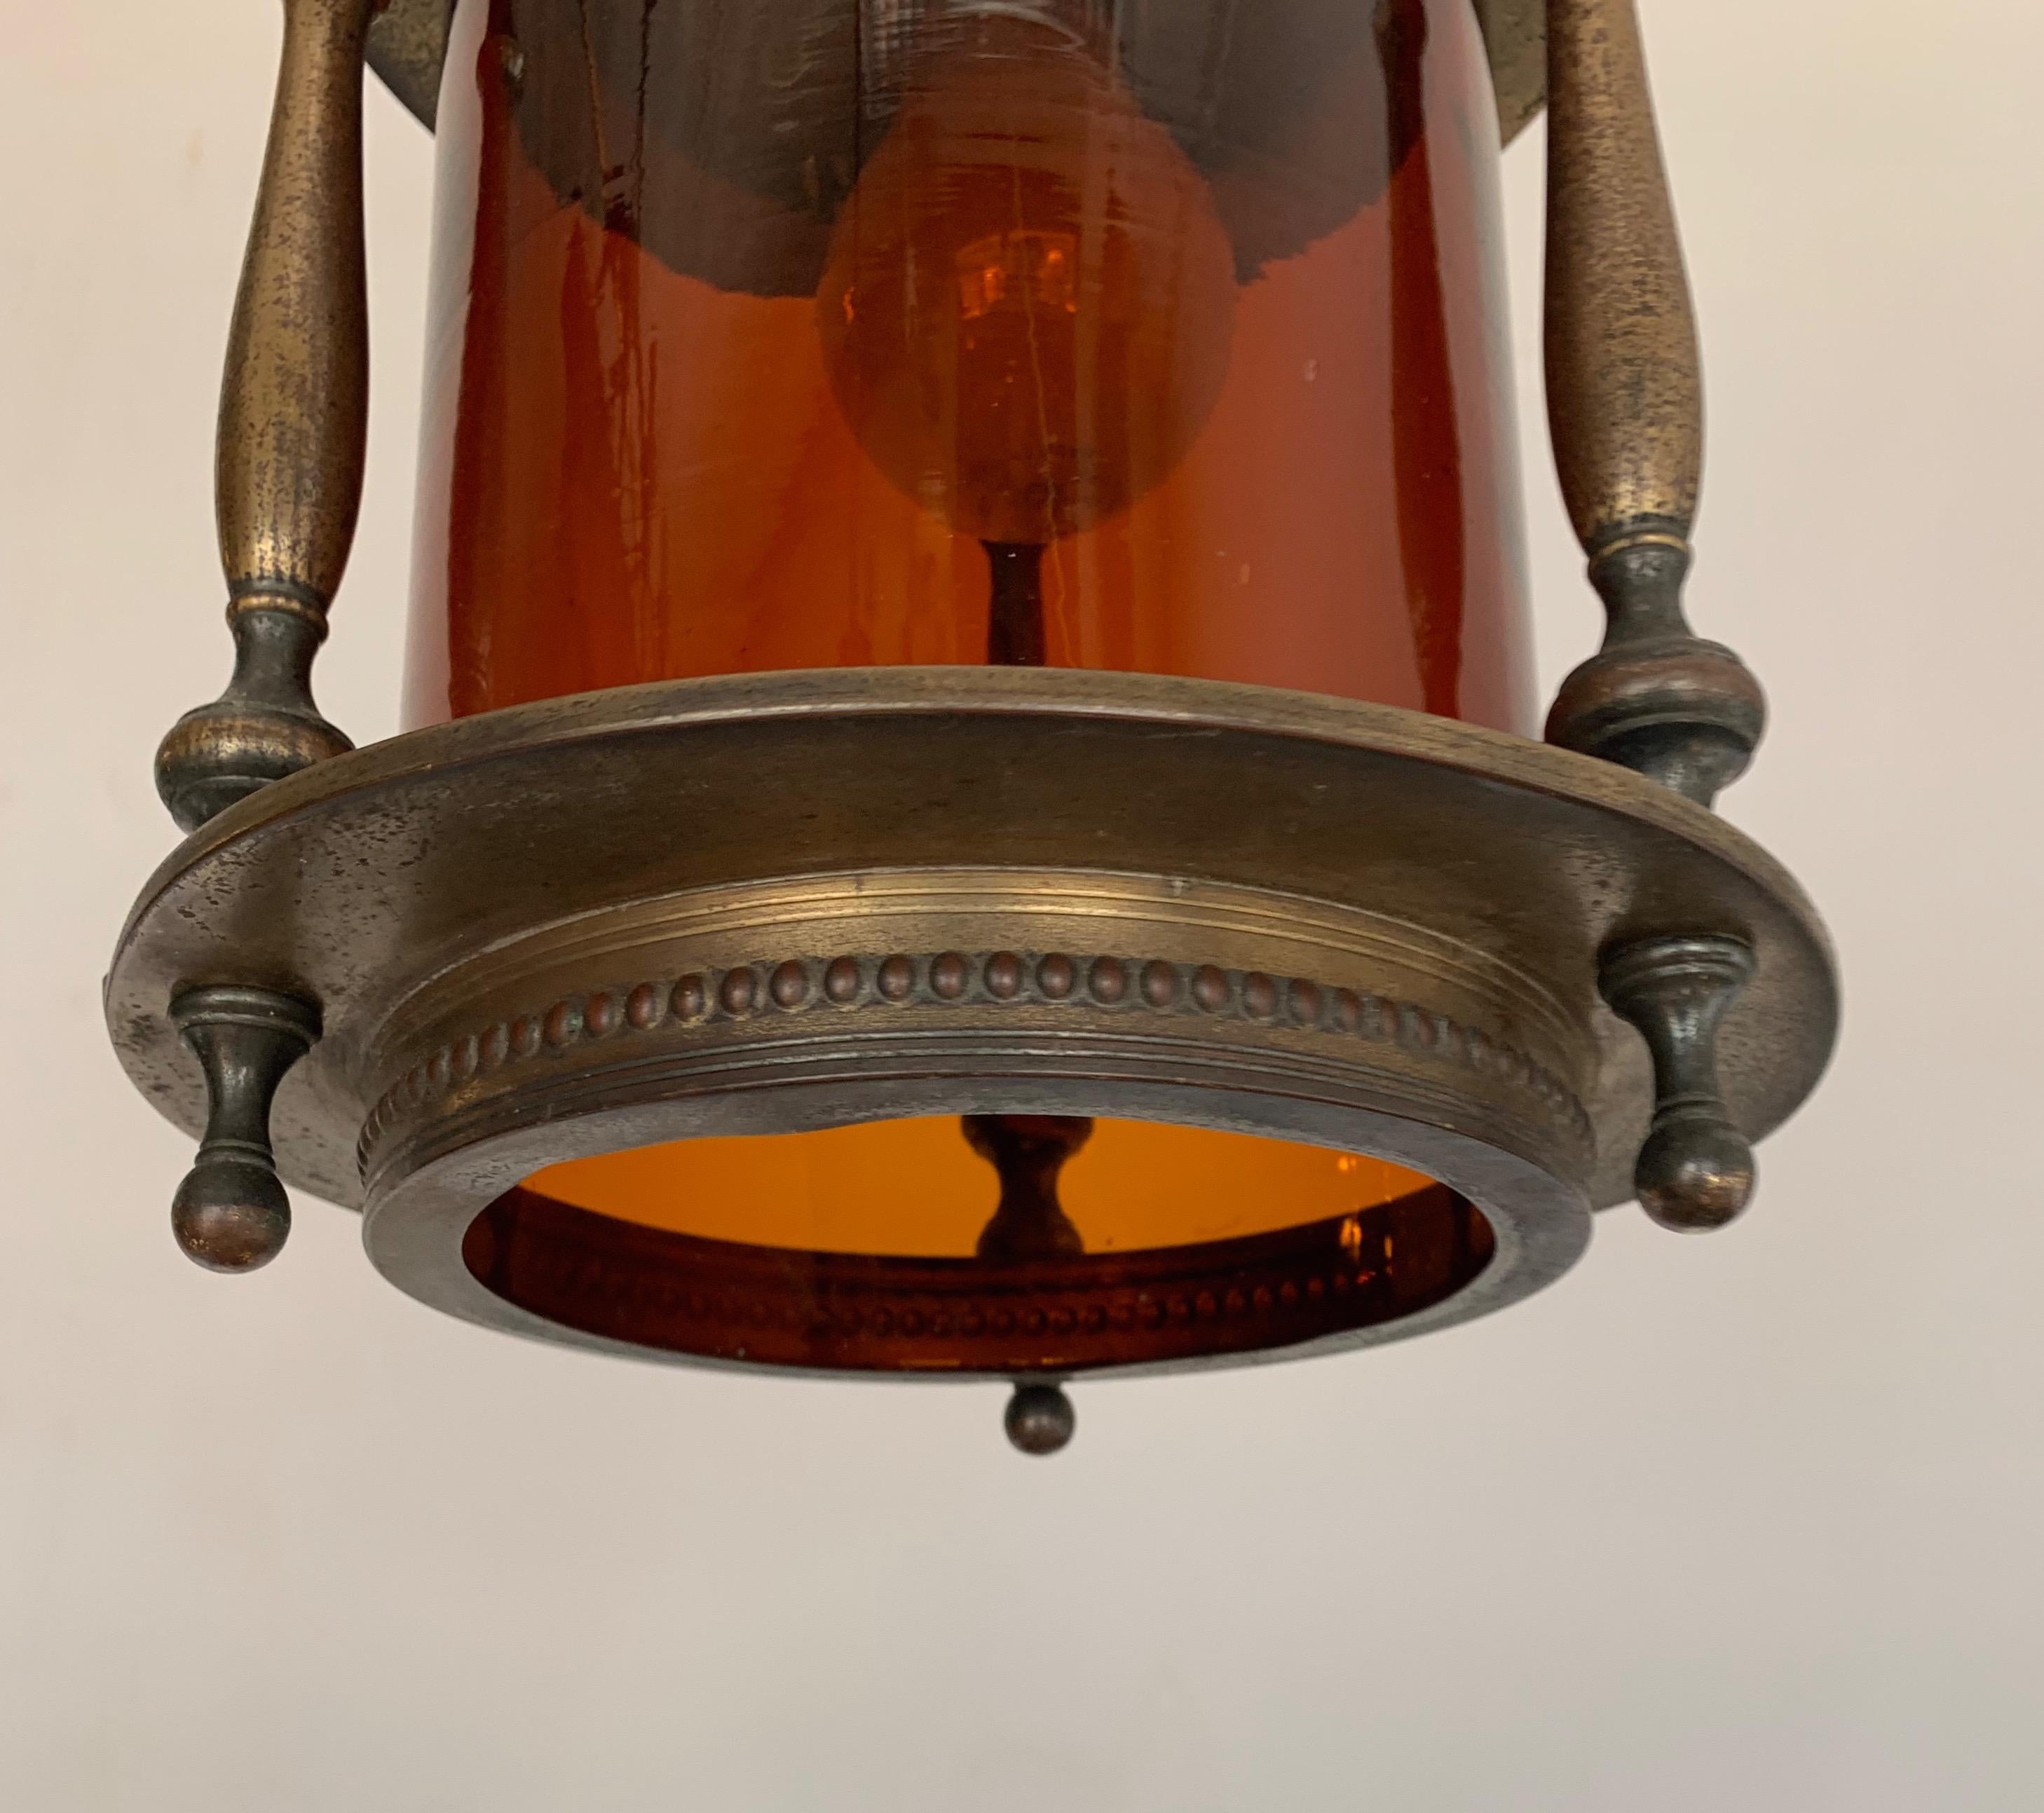 Rare Early 20th Century Brass & Orange Glass Ships Model Lantern Pendant Light For Sale 2